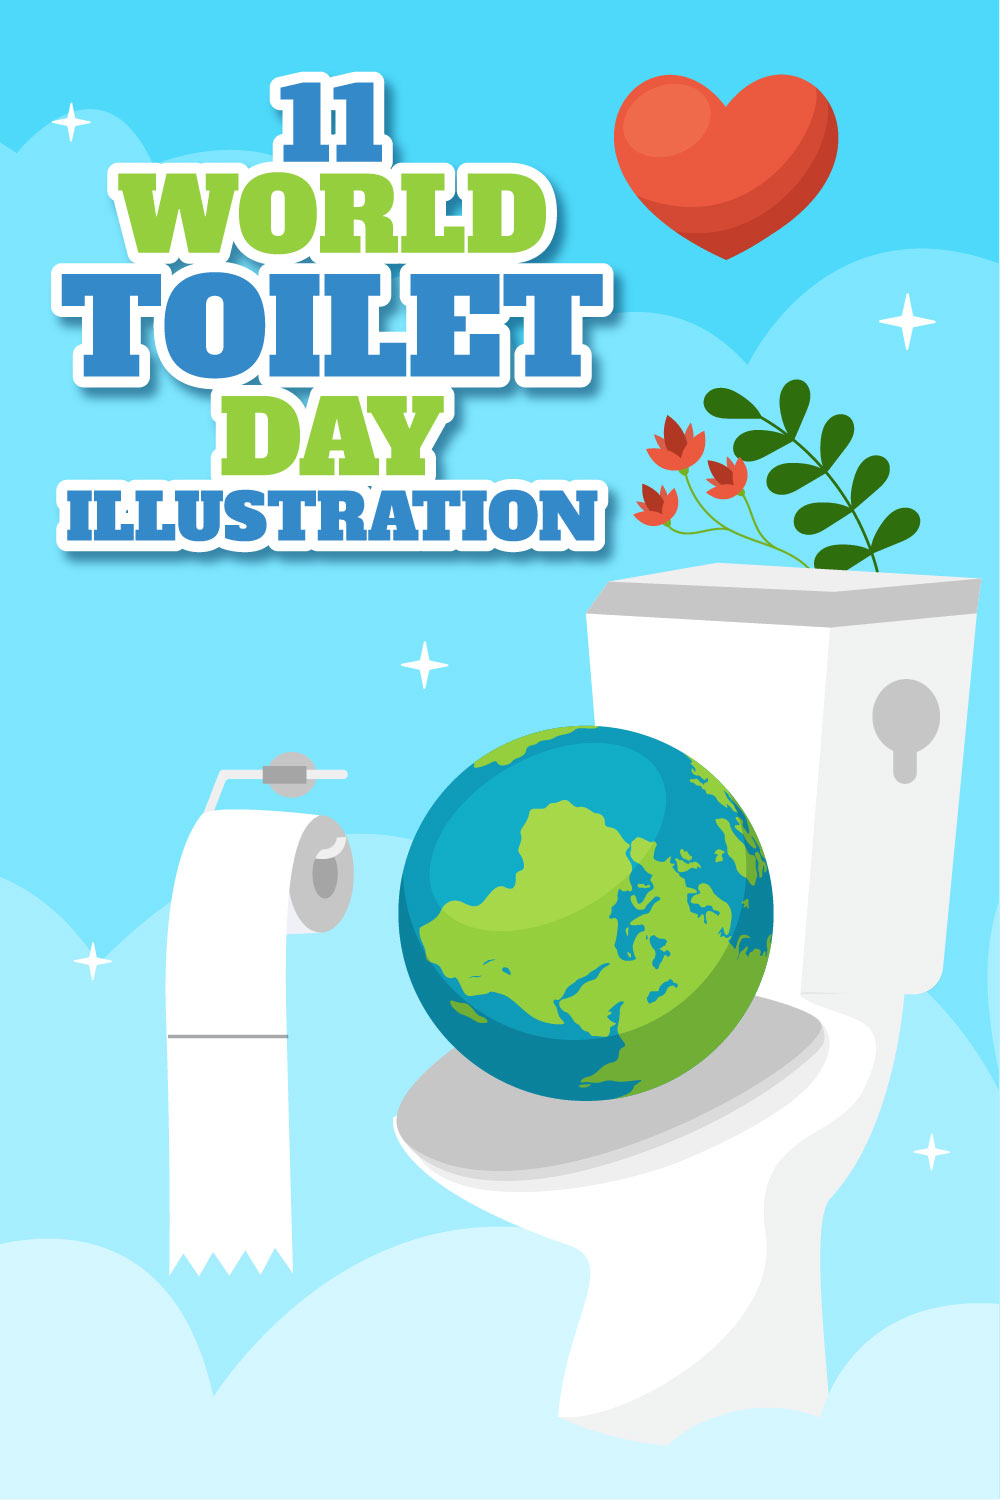 11 World Toilet Day Illustration pinterest preview image.